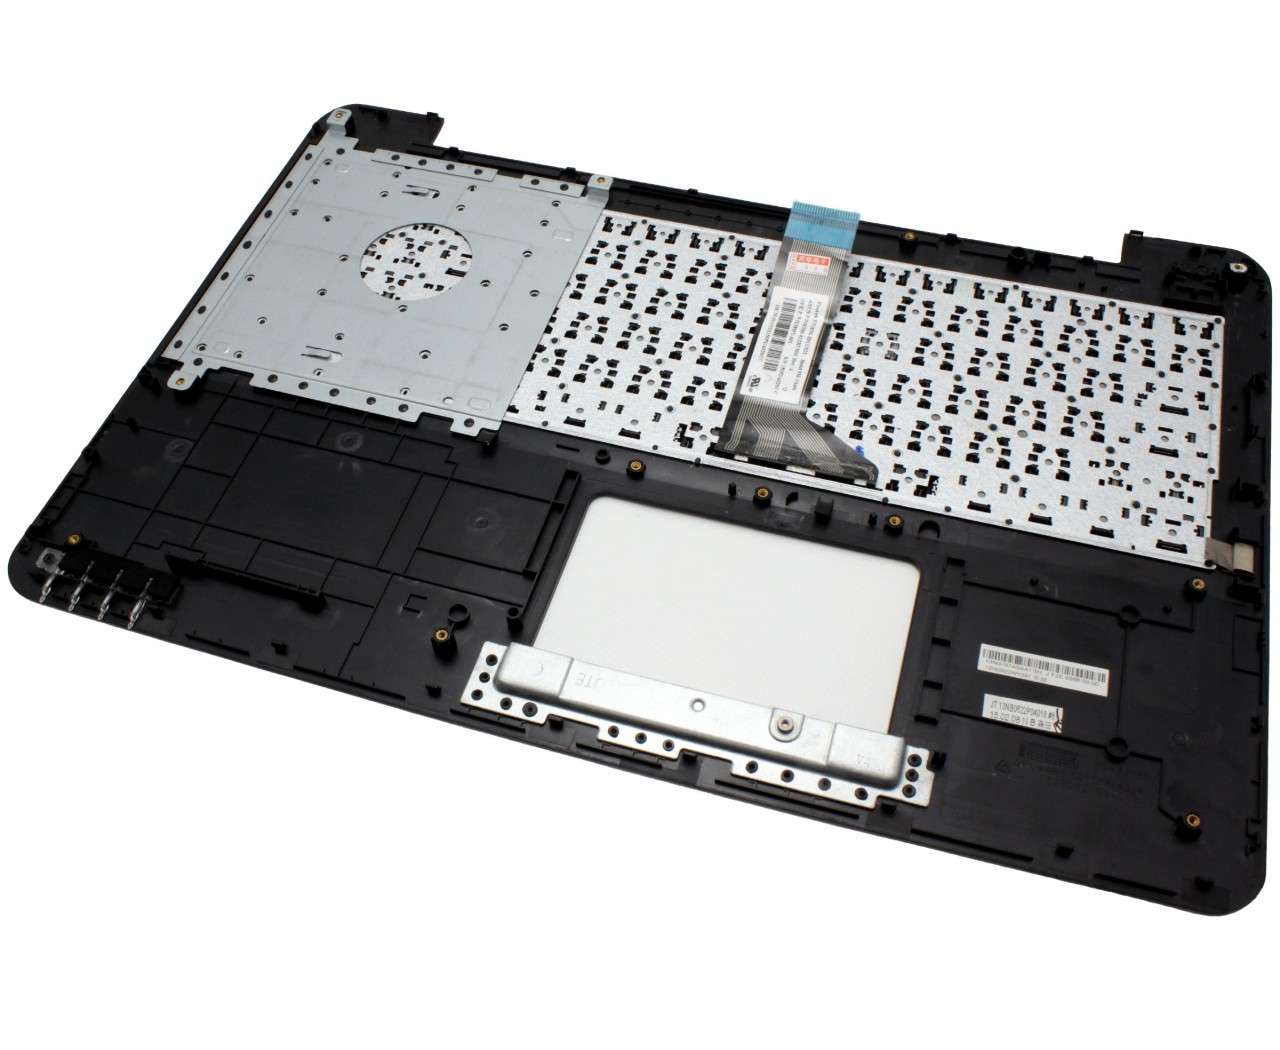 Tastatura Asus A555L Neagra cu Palmrest argintiu